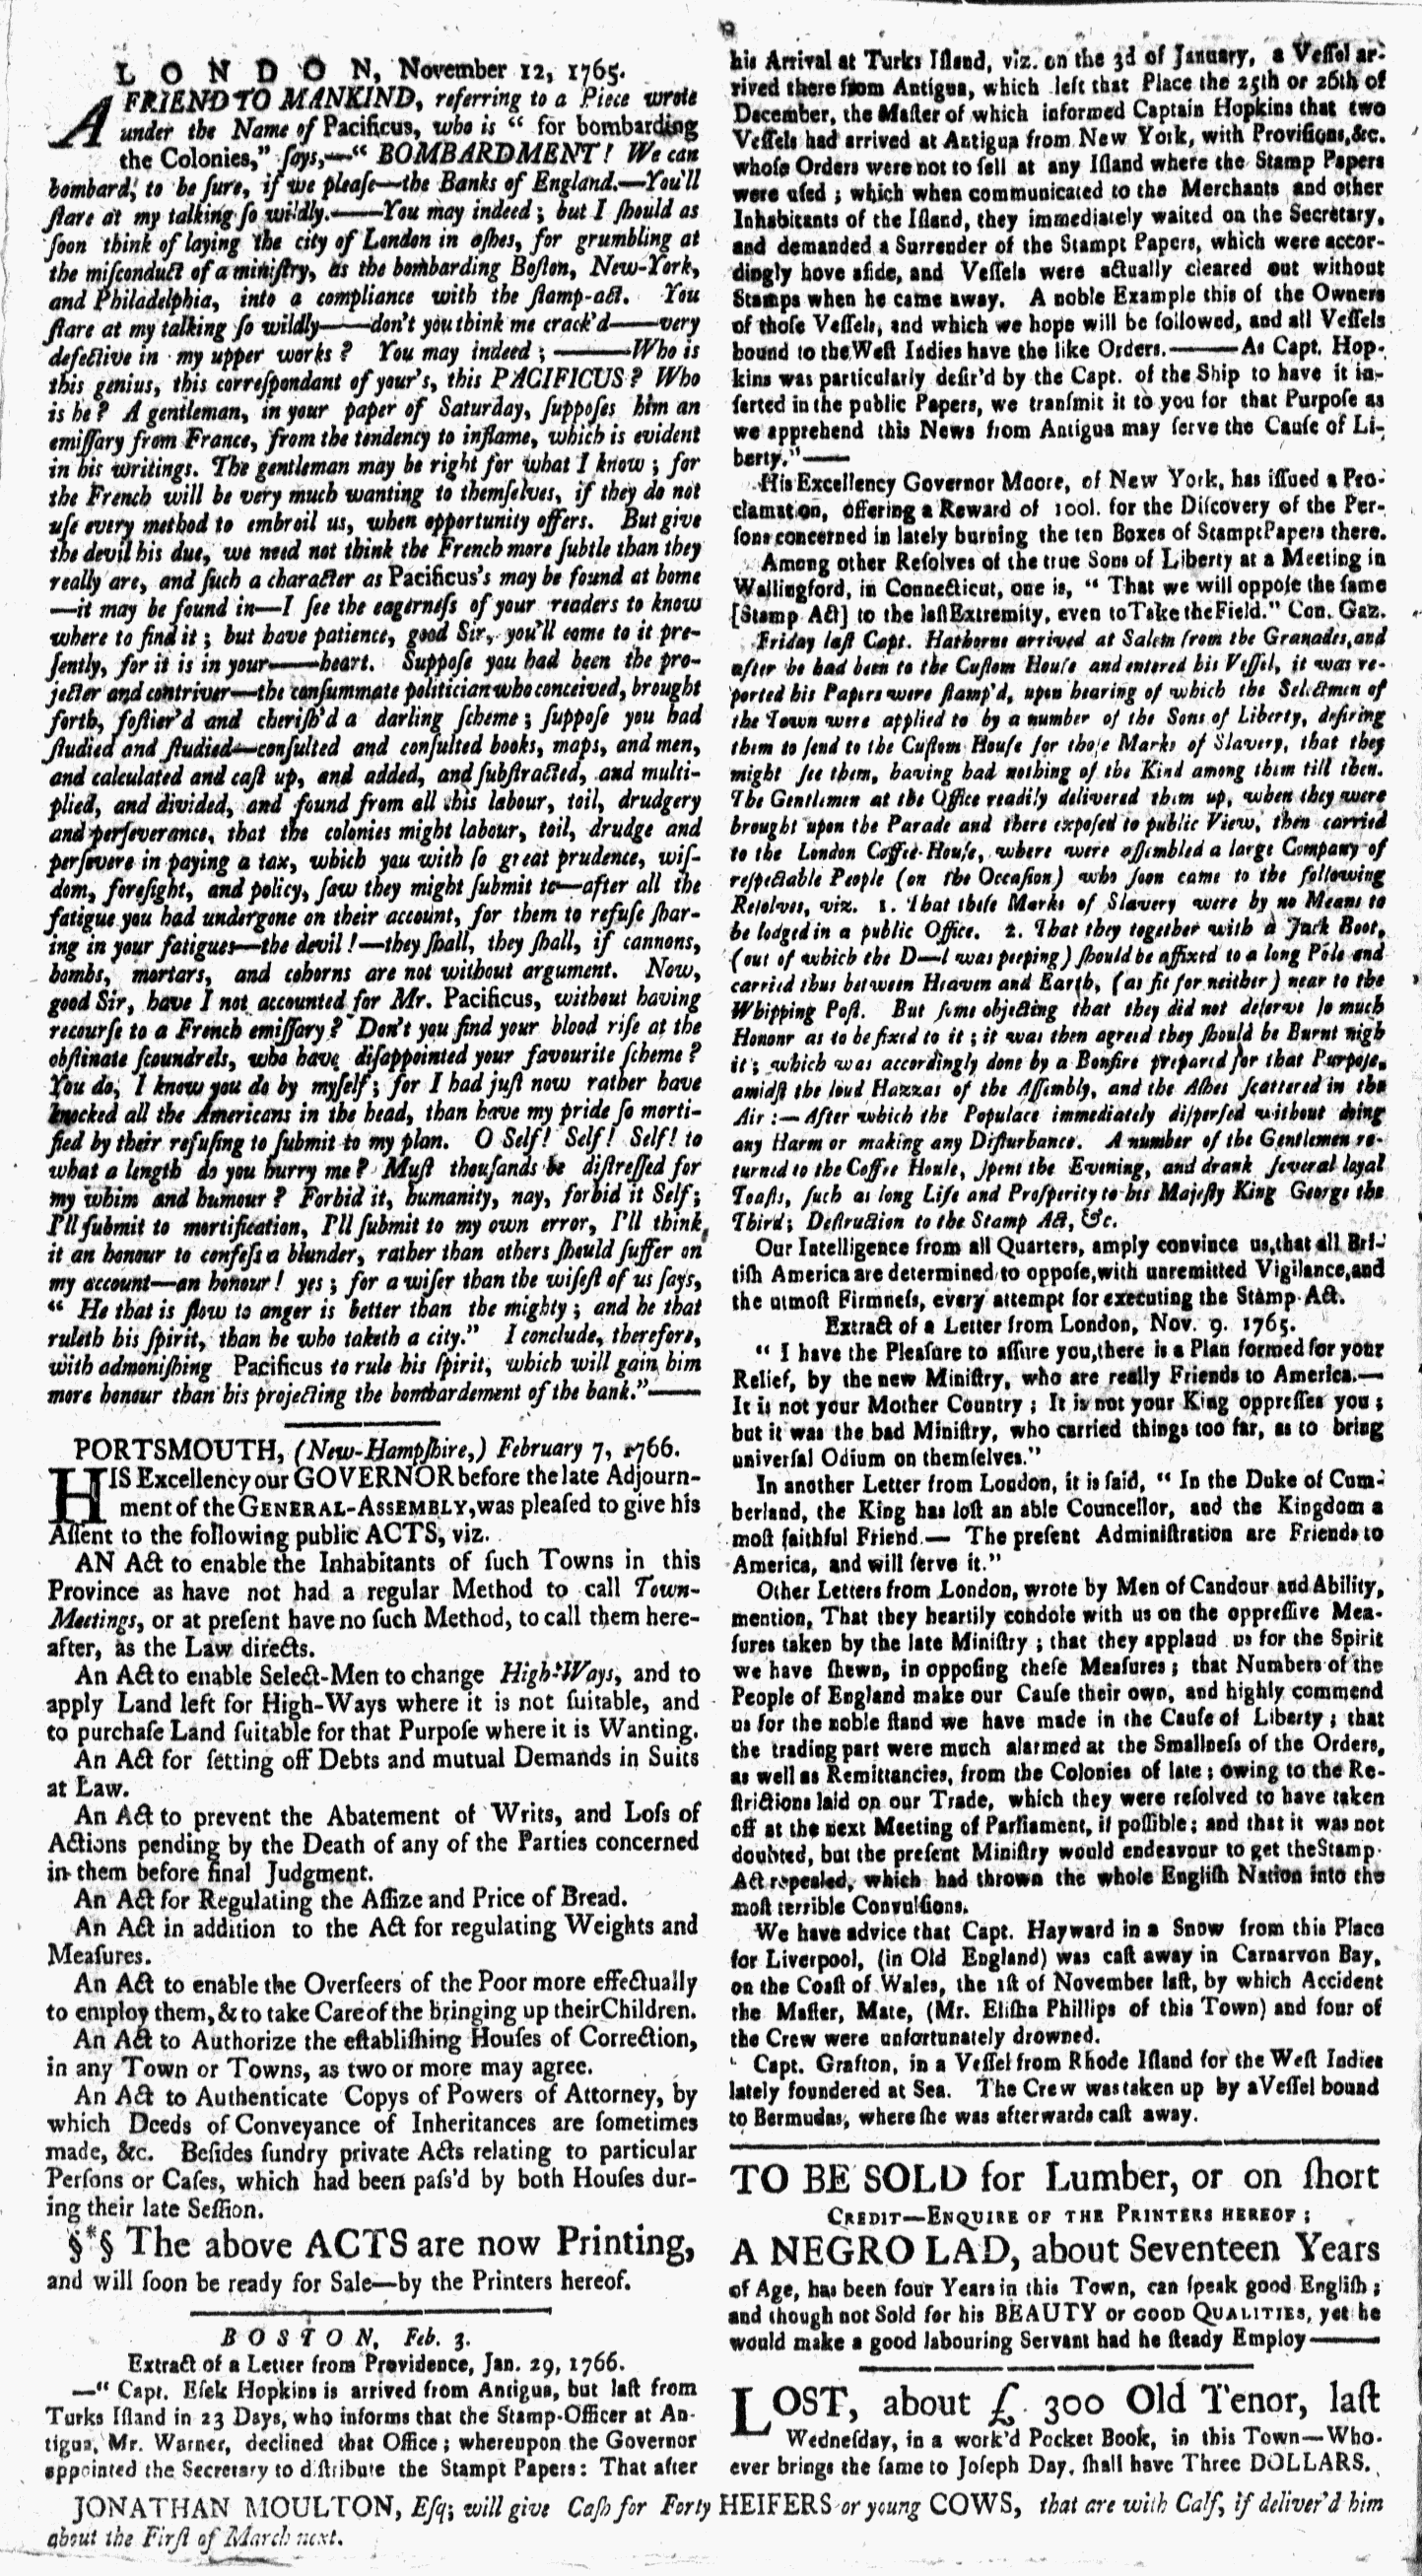 Feb 7 - New-Hampshire Gazette Fourth Page 2:7:1766